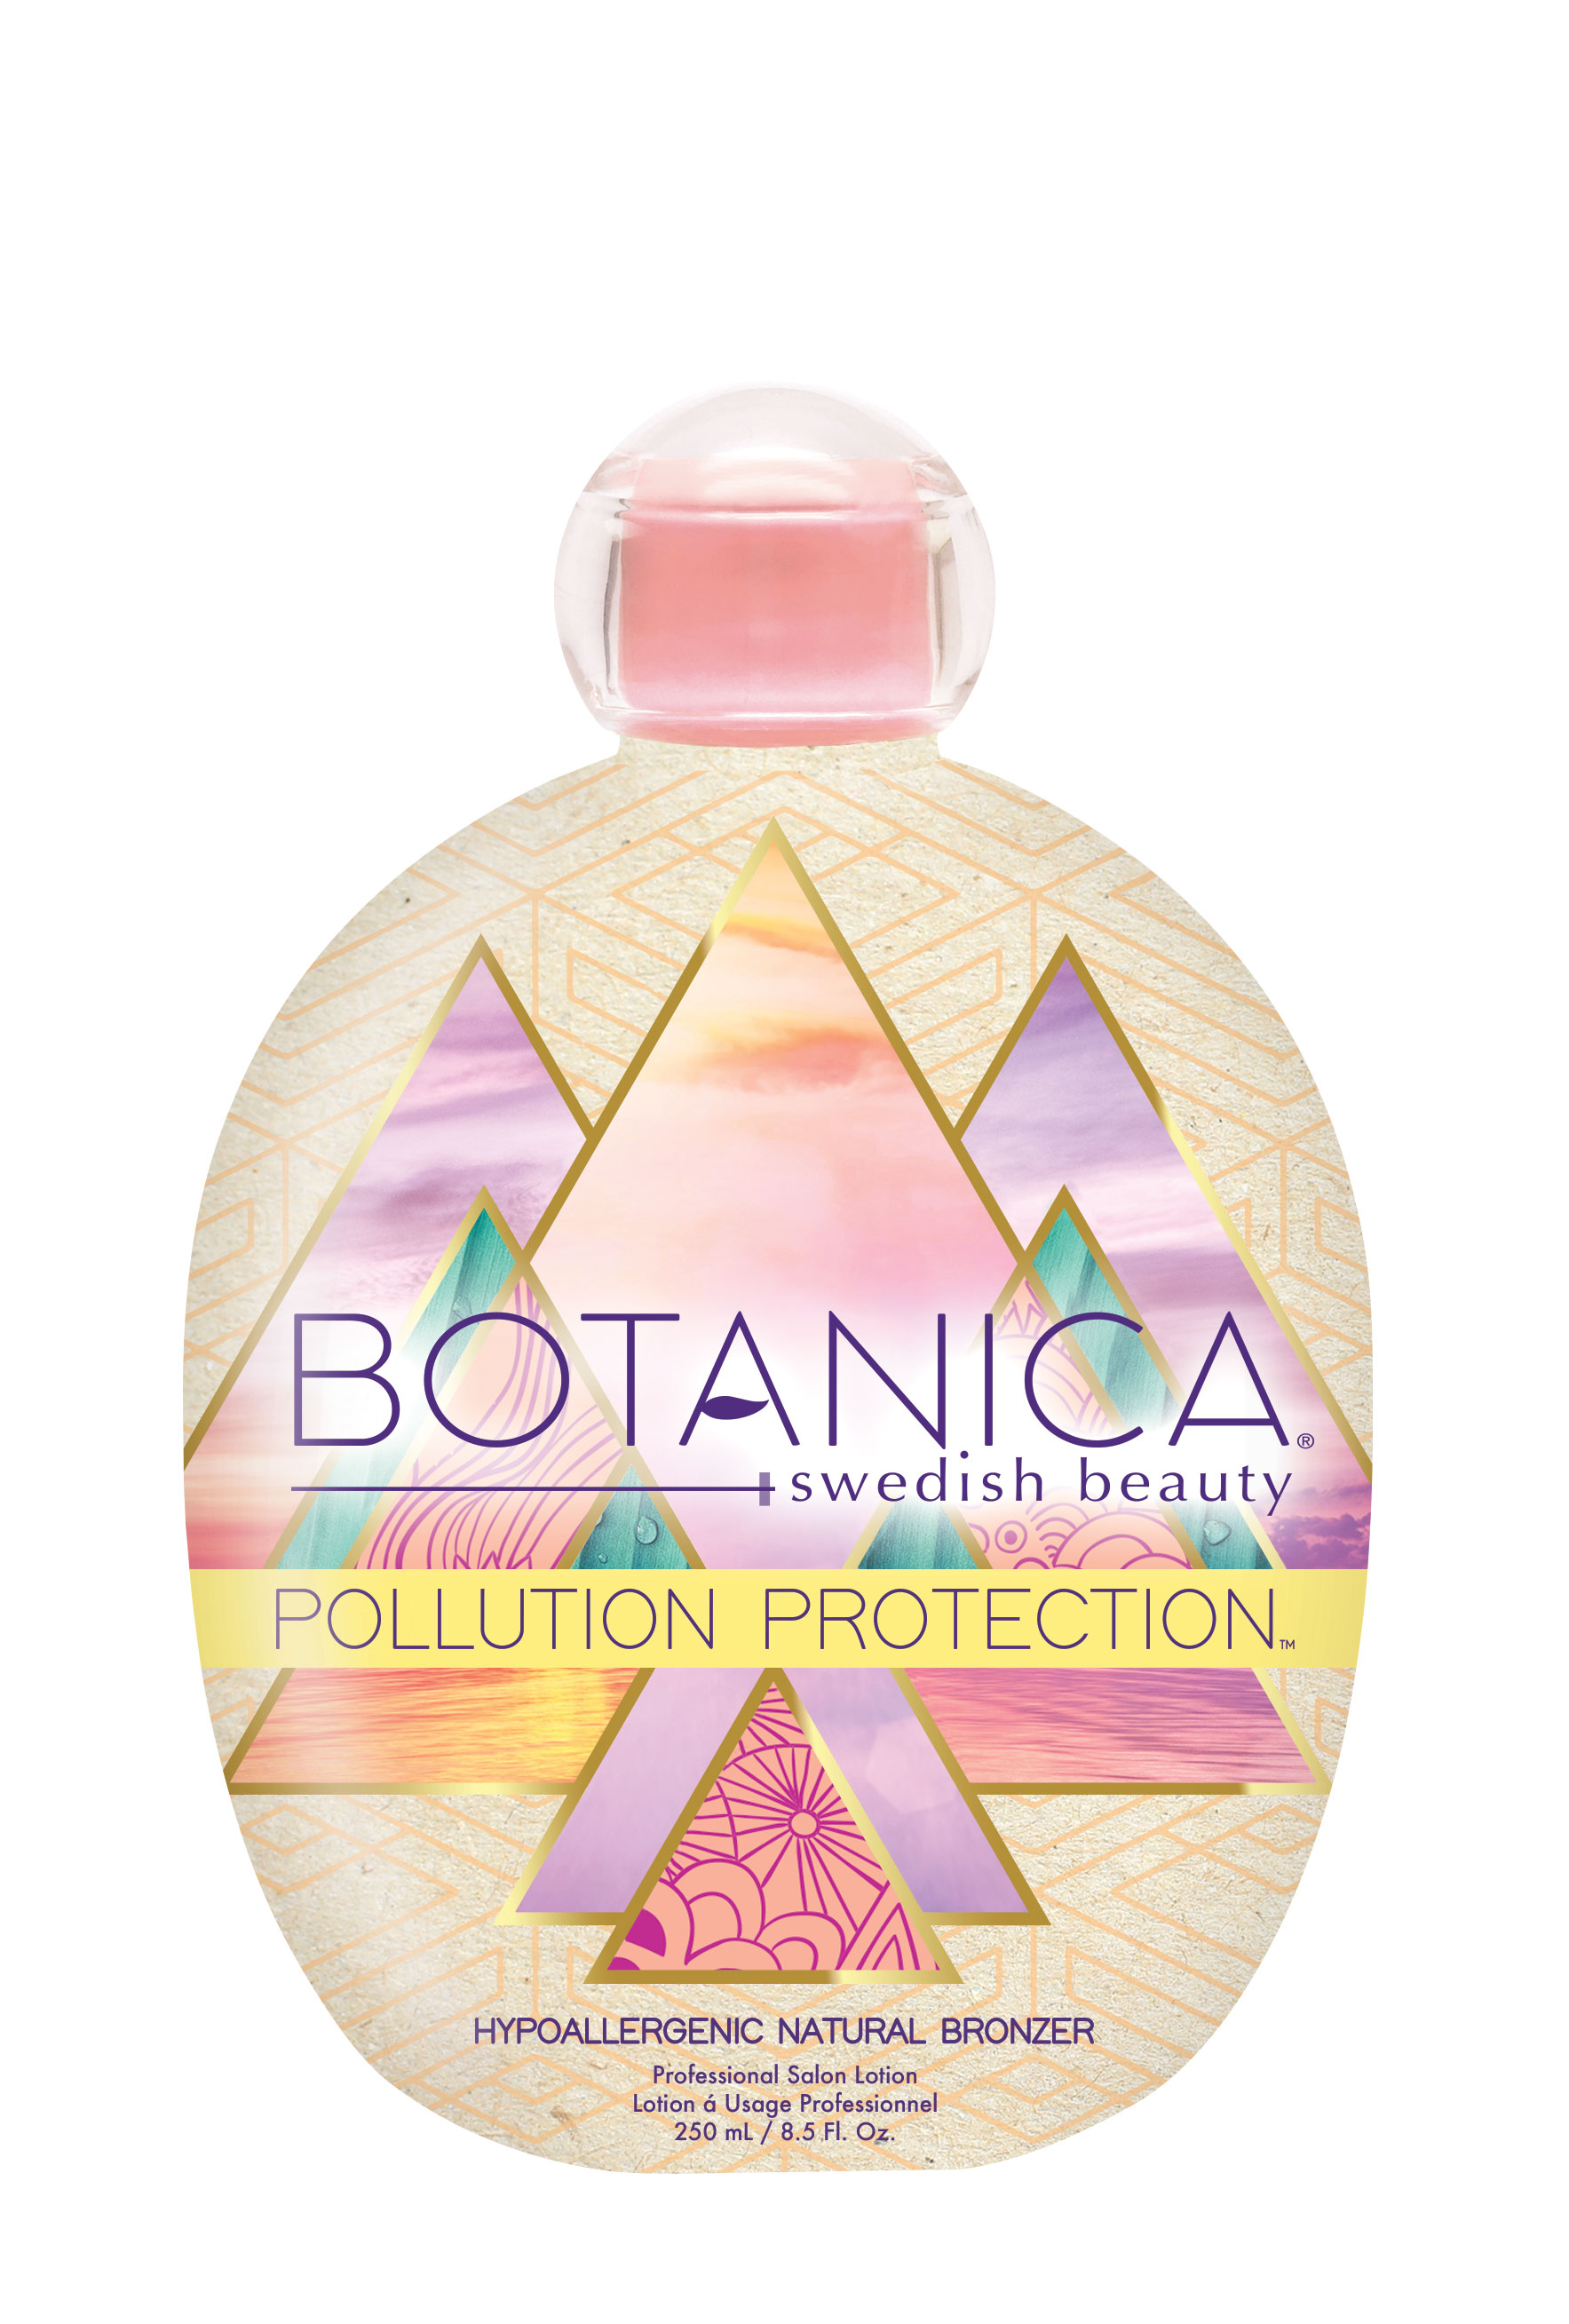 Botanica Pollution Protection™ Natural Bronzer